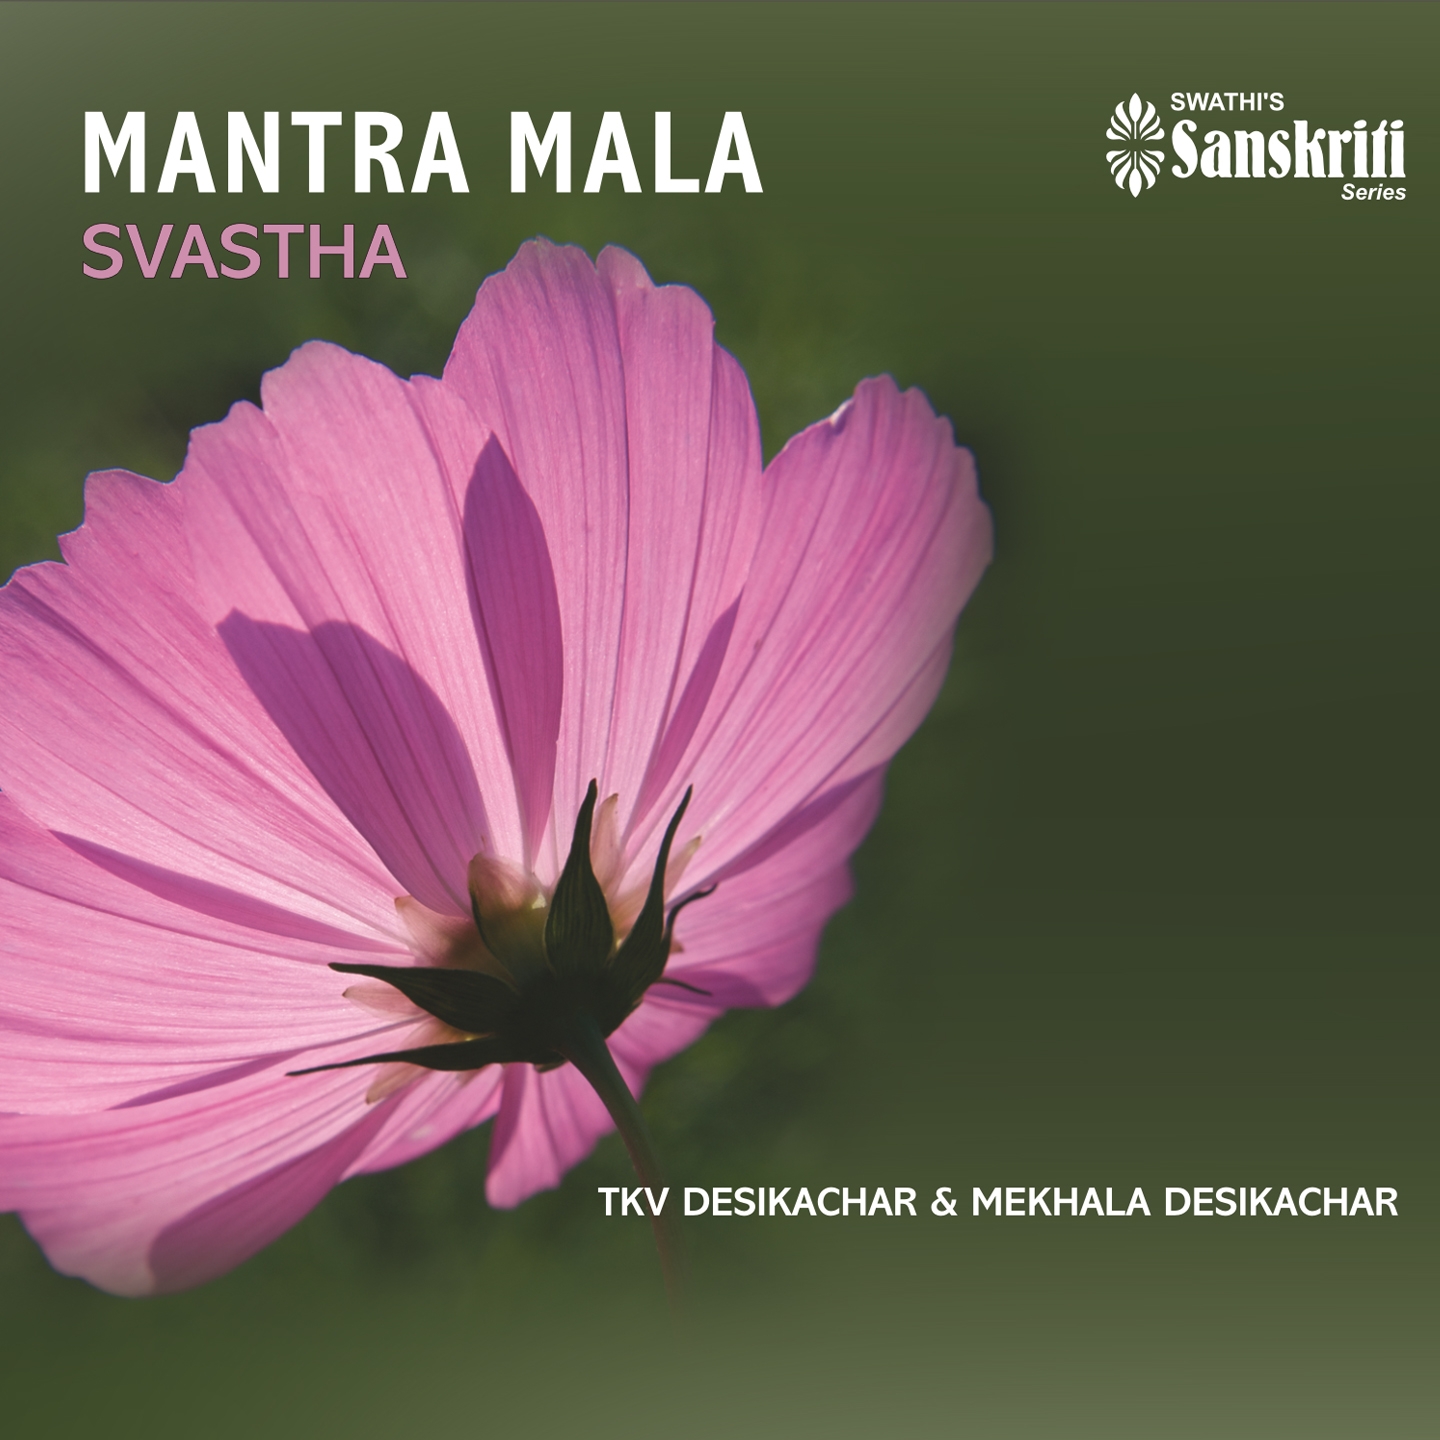 Mantramala - Svastha